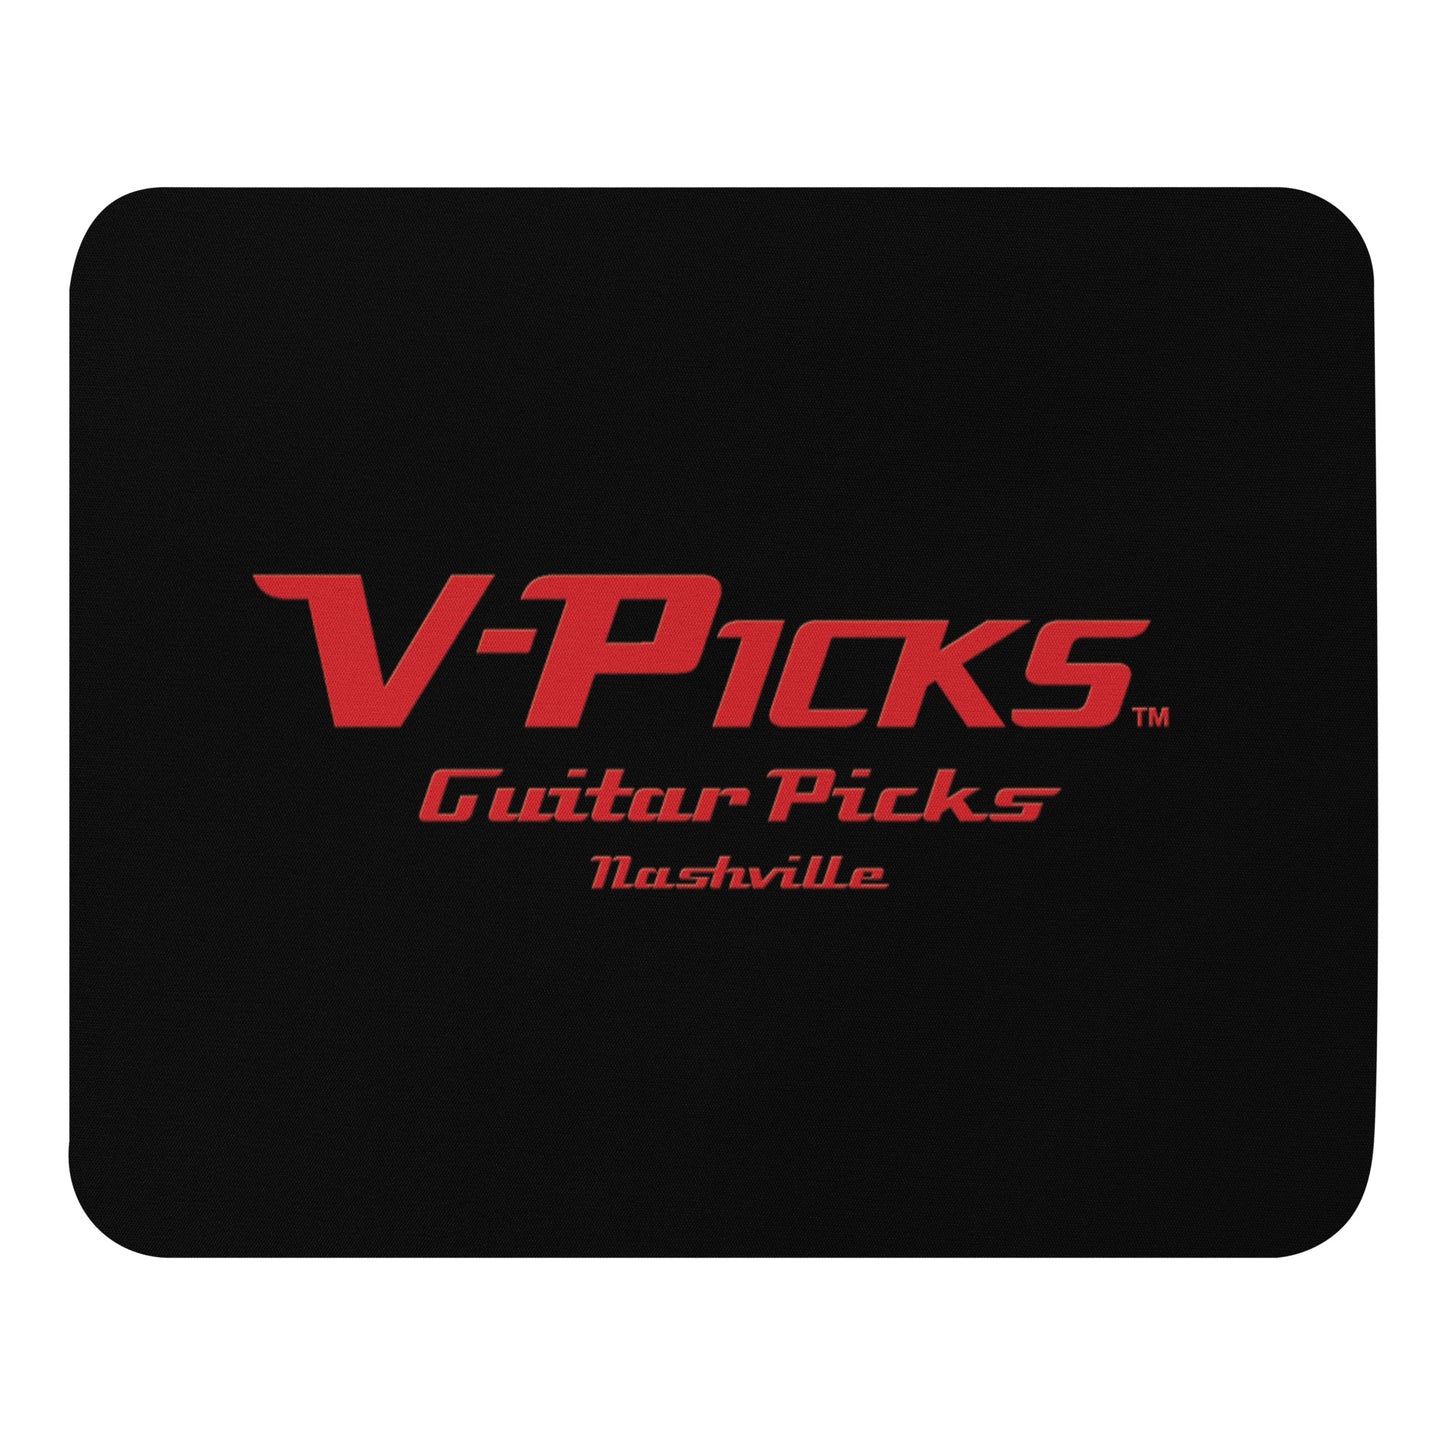 V-Picks Logo Mouse pad